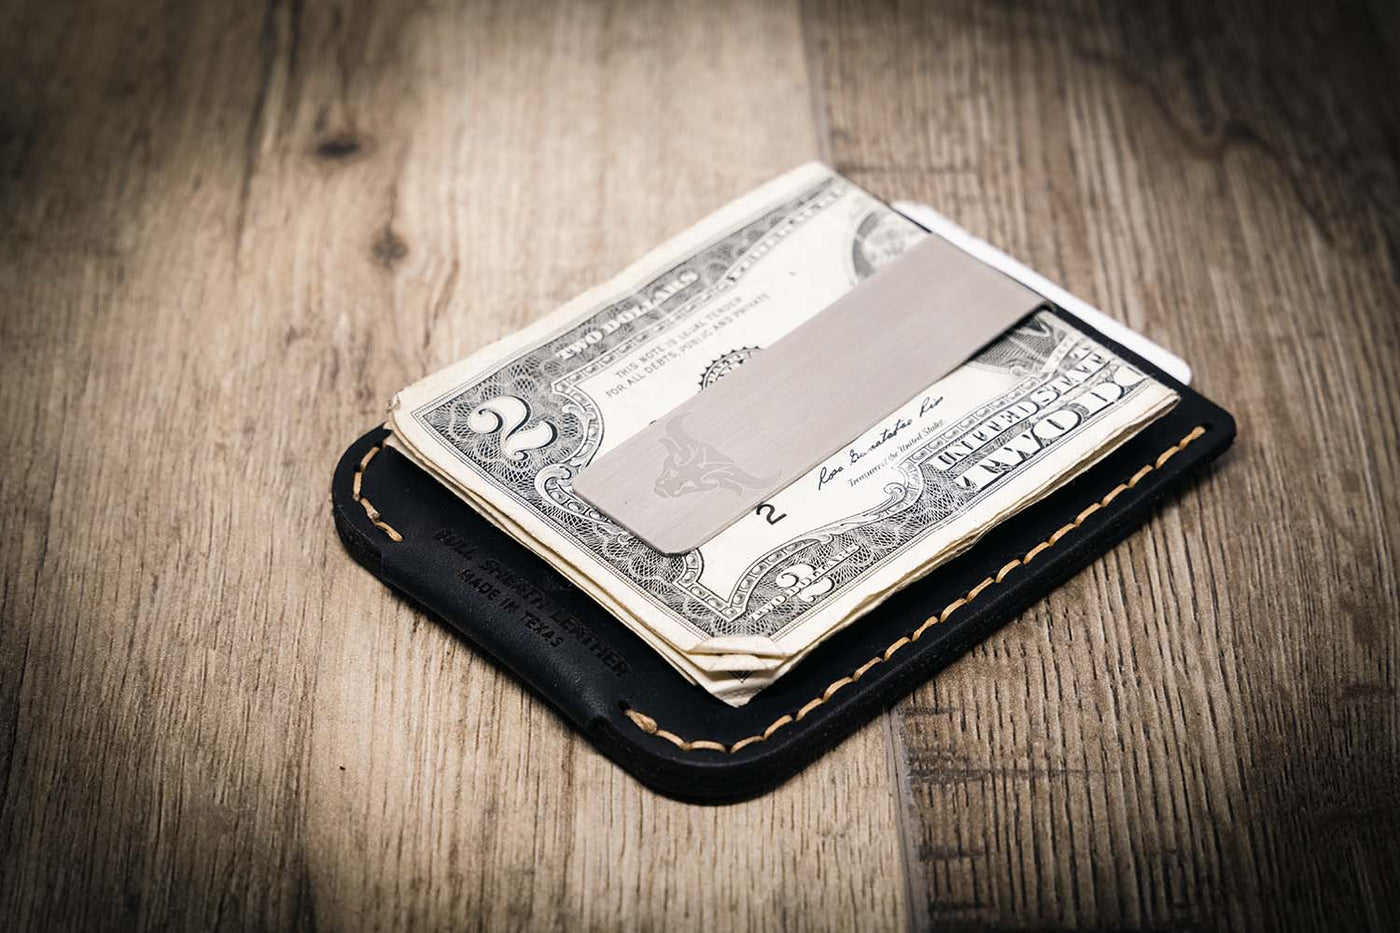 Leather Money Clip Wallet For Mens, Card Holder - The Keller – Bull Sheath  Leather